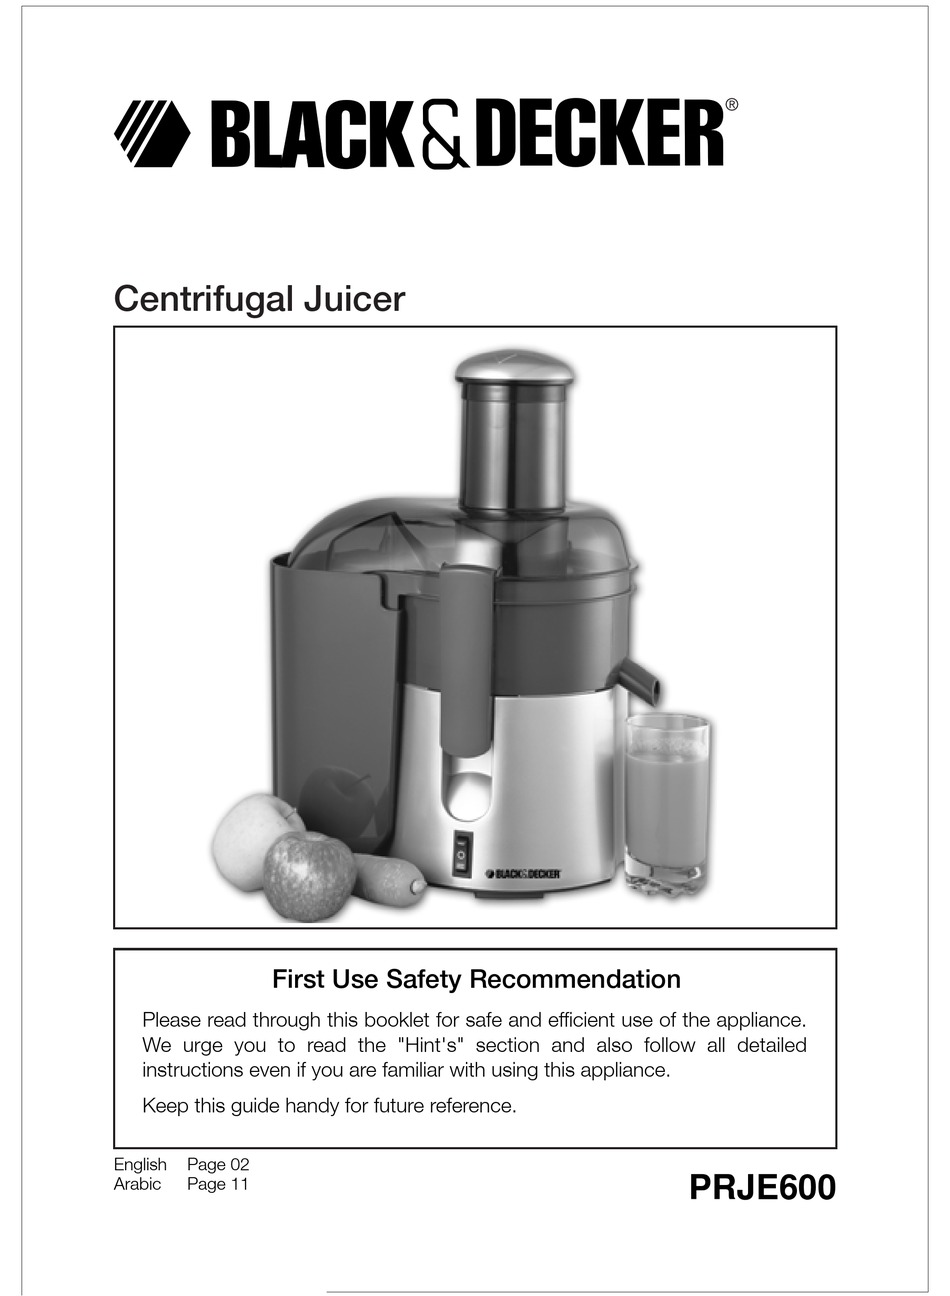 BLACK+DECKER Handy Juicer, Citrus Juicer, CJ630 